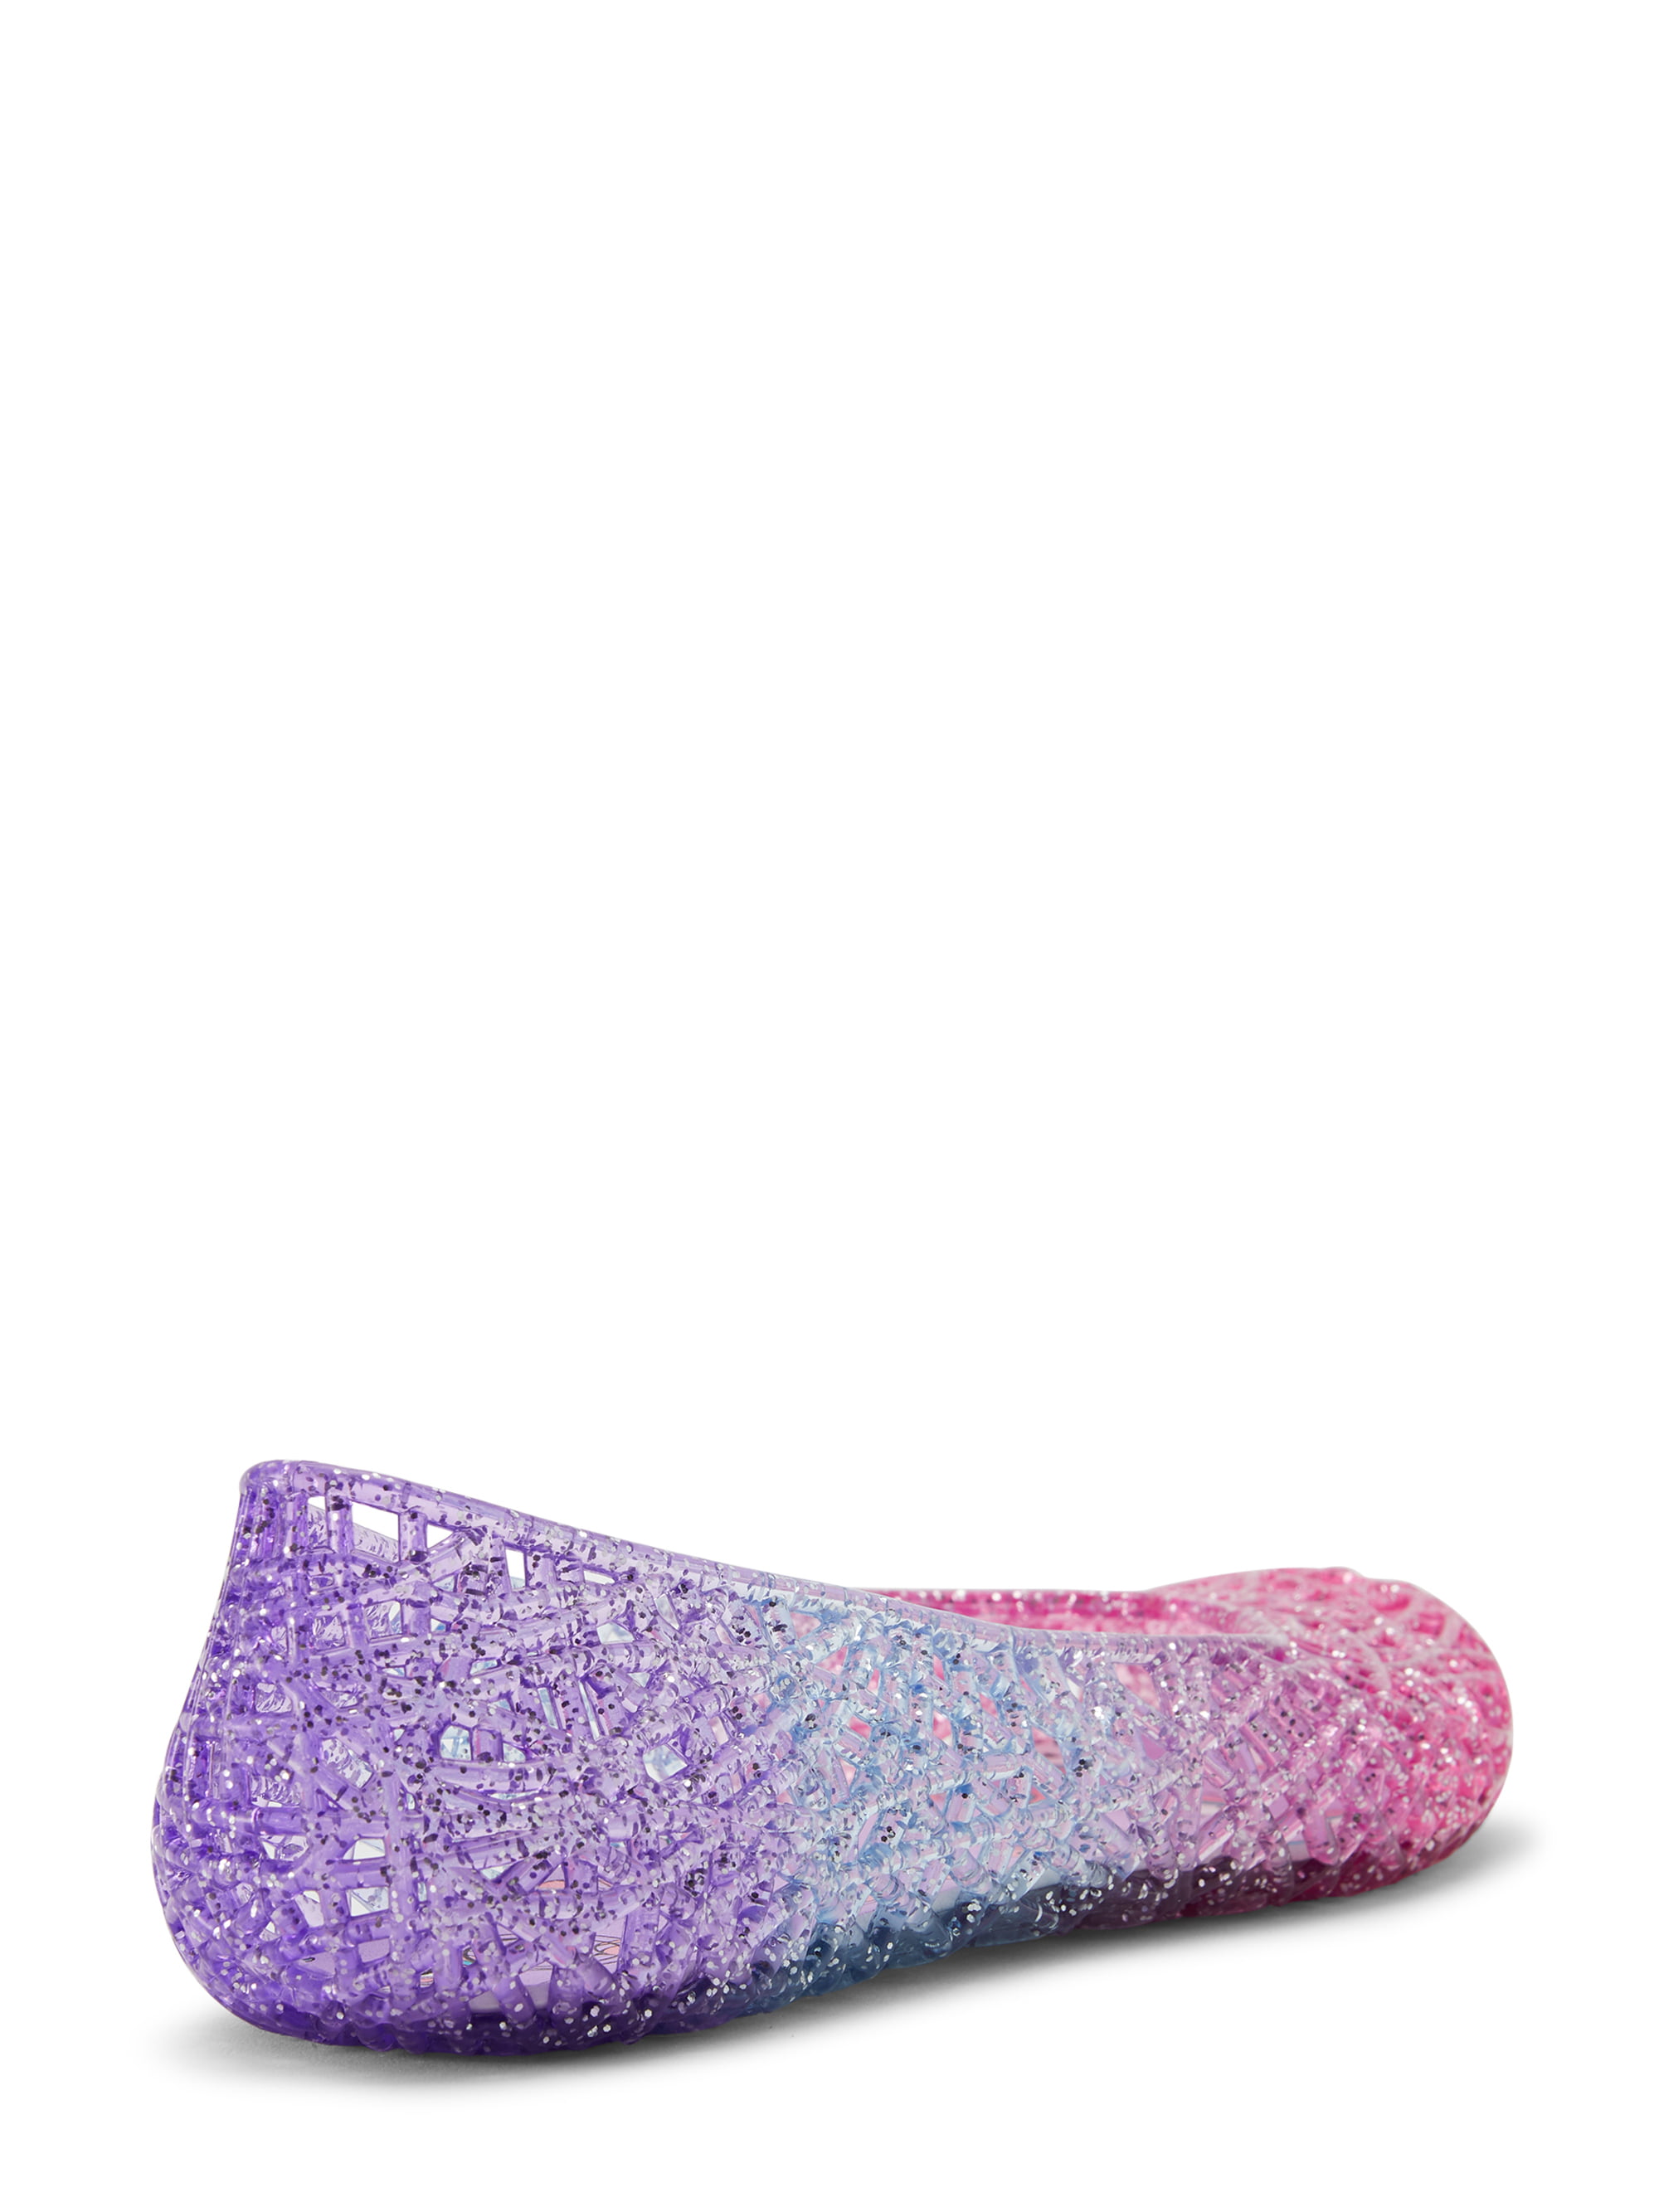 Details about   Girls Walmart Brand Jelly Ballet Flat Shoes Pink Glitter Size 3 NEW